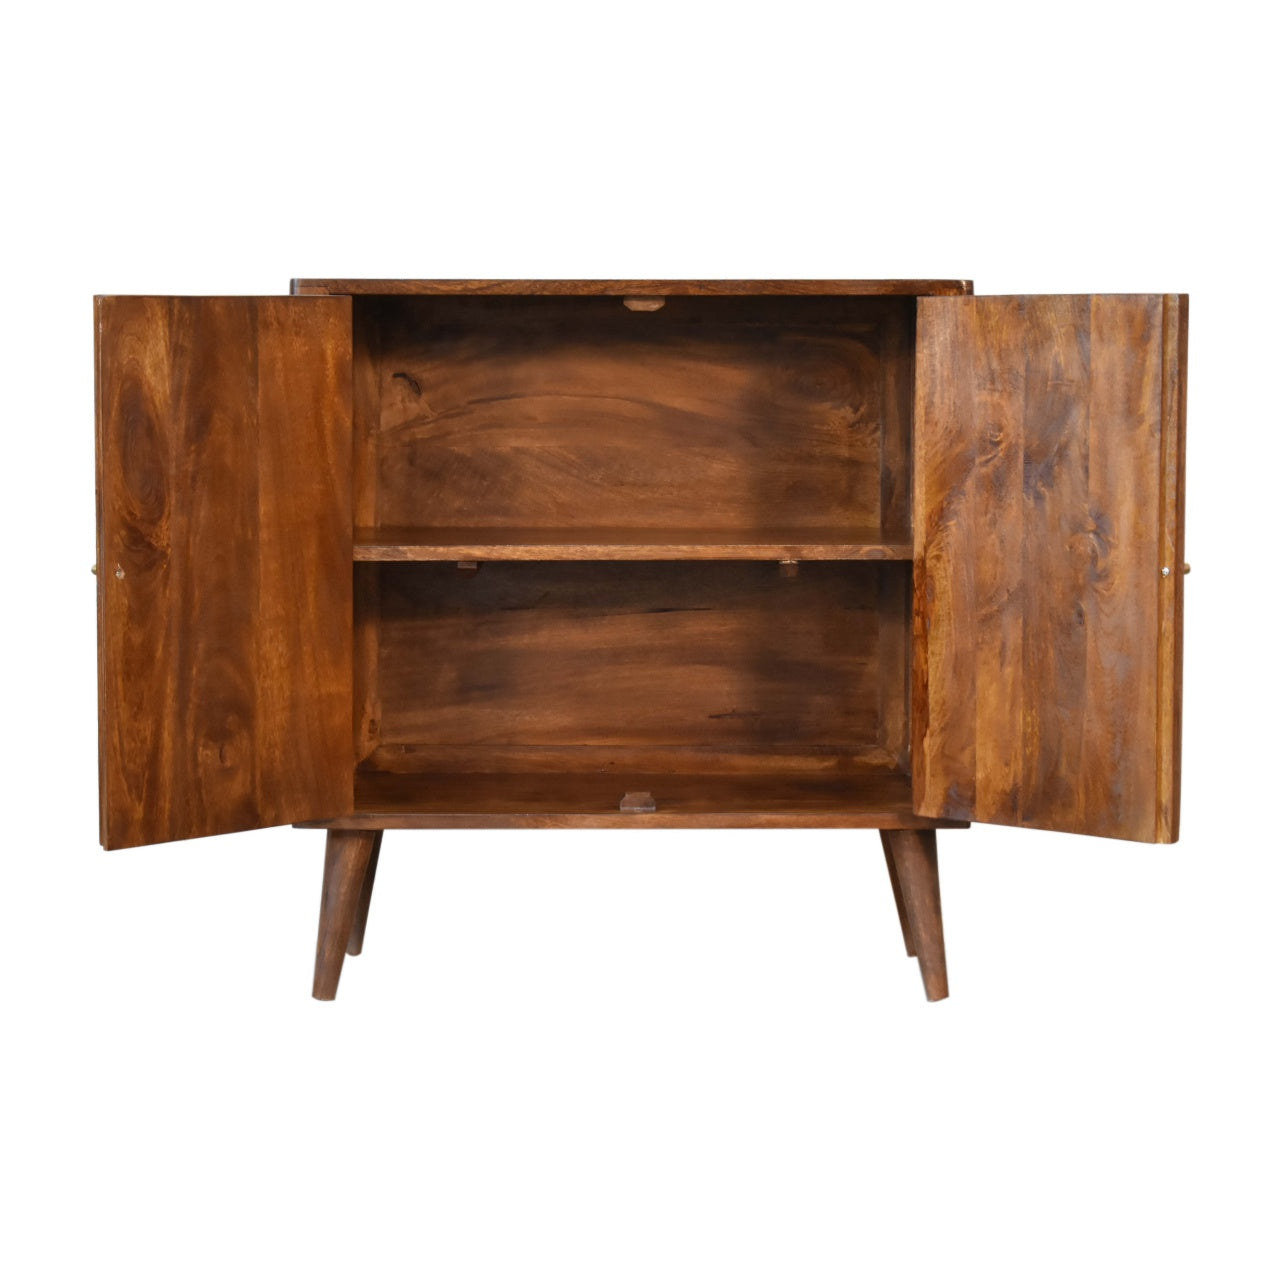 Chestnut Carved Arch Cabinet 2 Door 1 Shelf Solid Mango Wood - CasaFenix